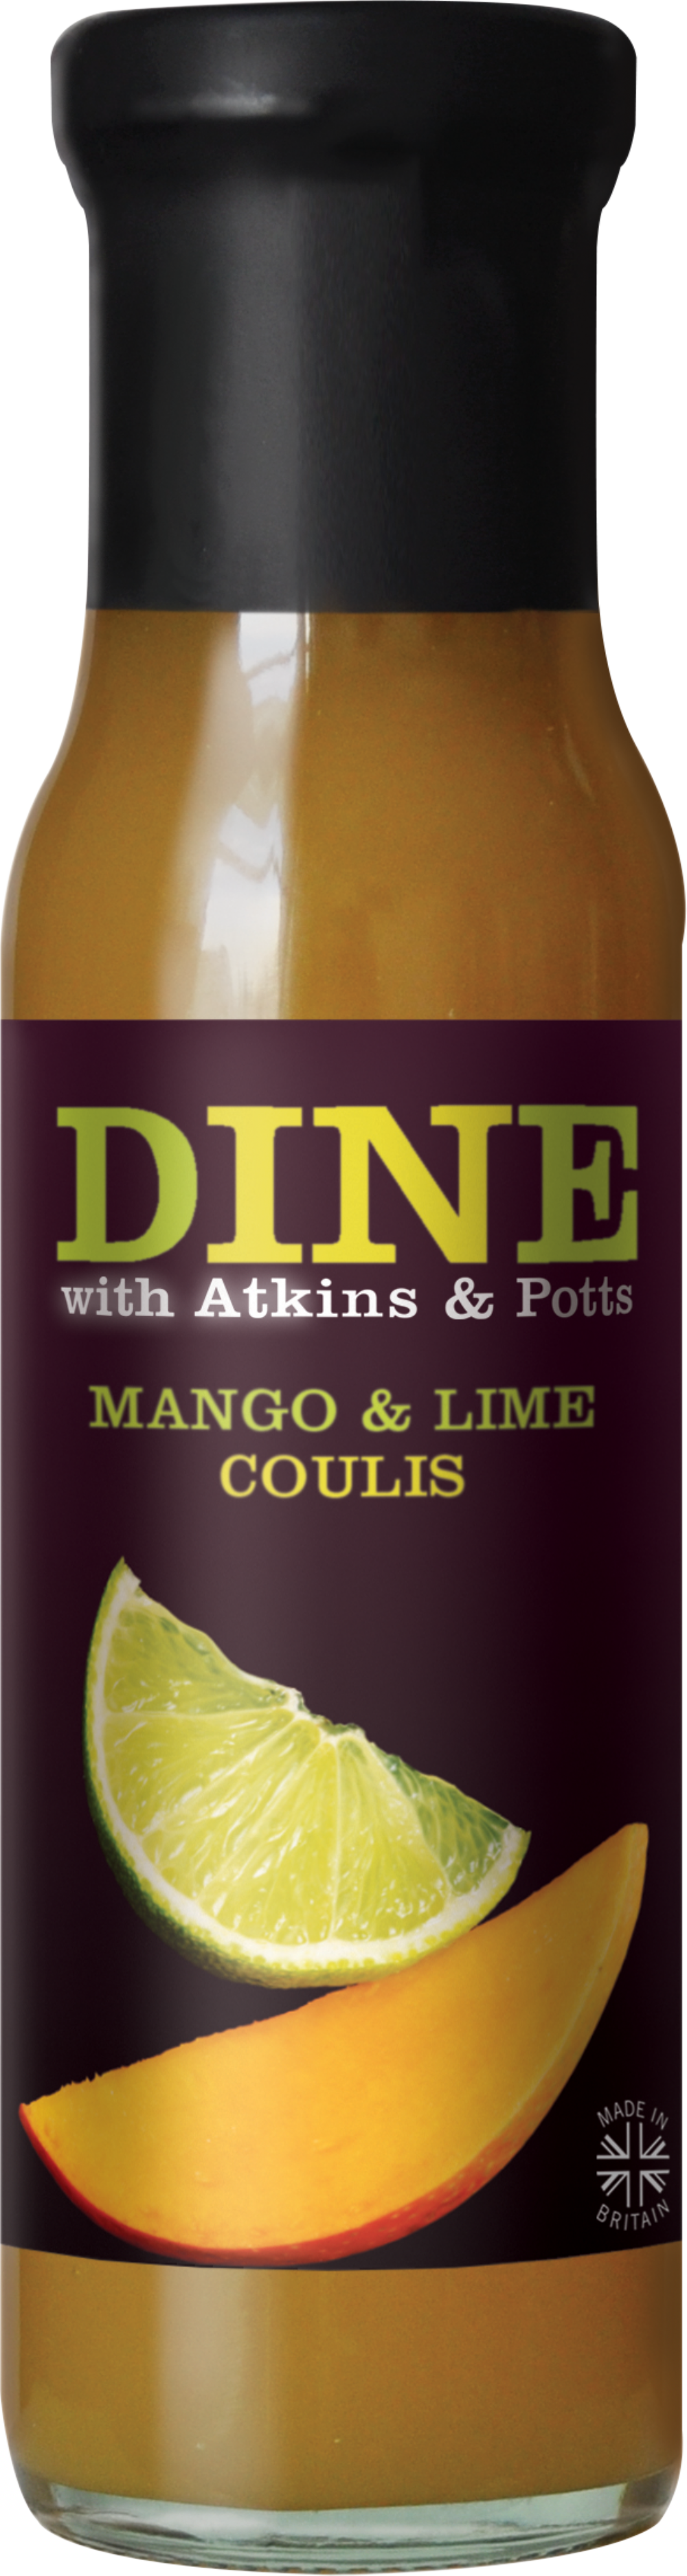 ATKINS & POTTS Mango & Lime Coulis 250g